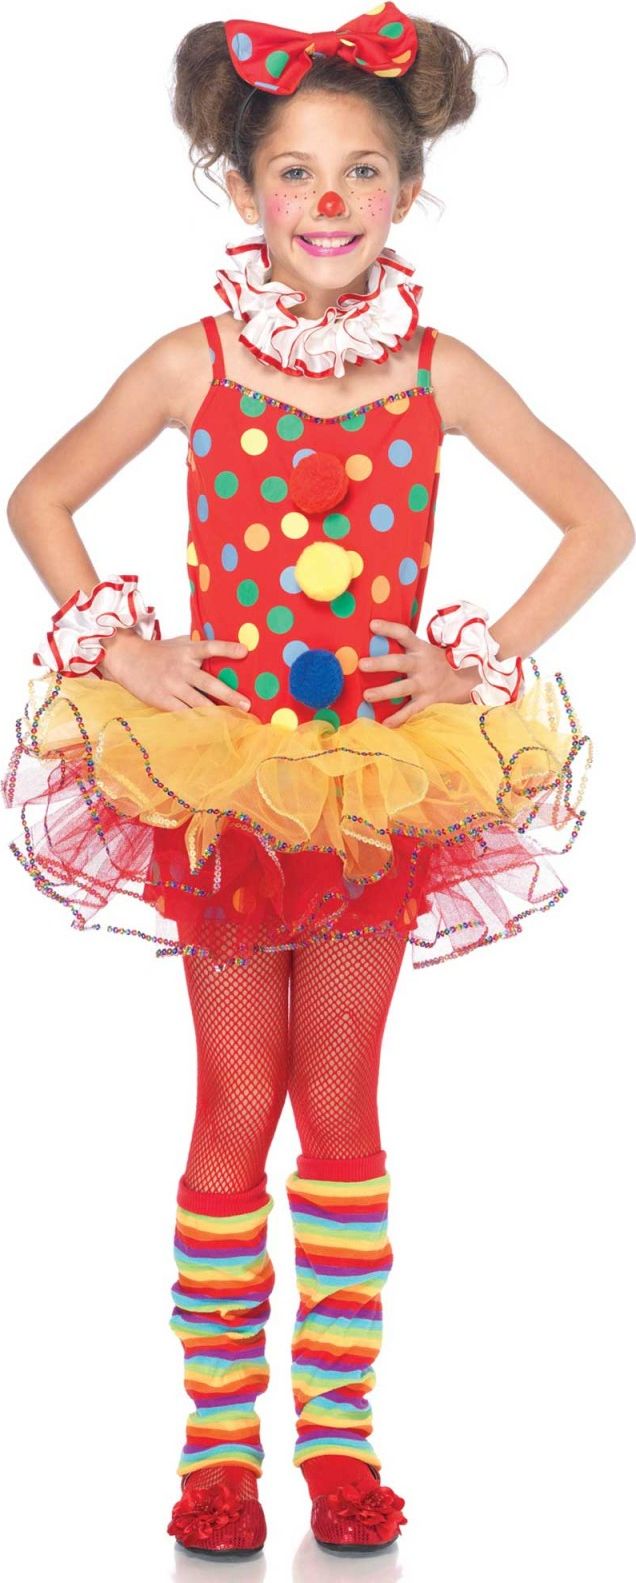 Circus clown kostuum meisjes